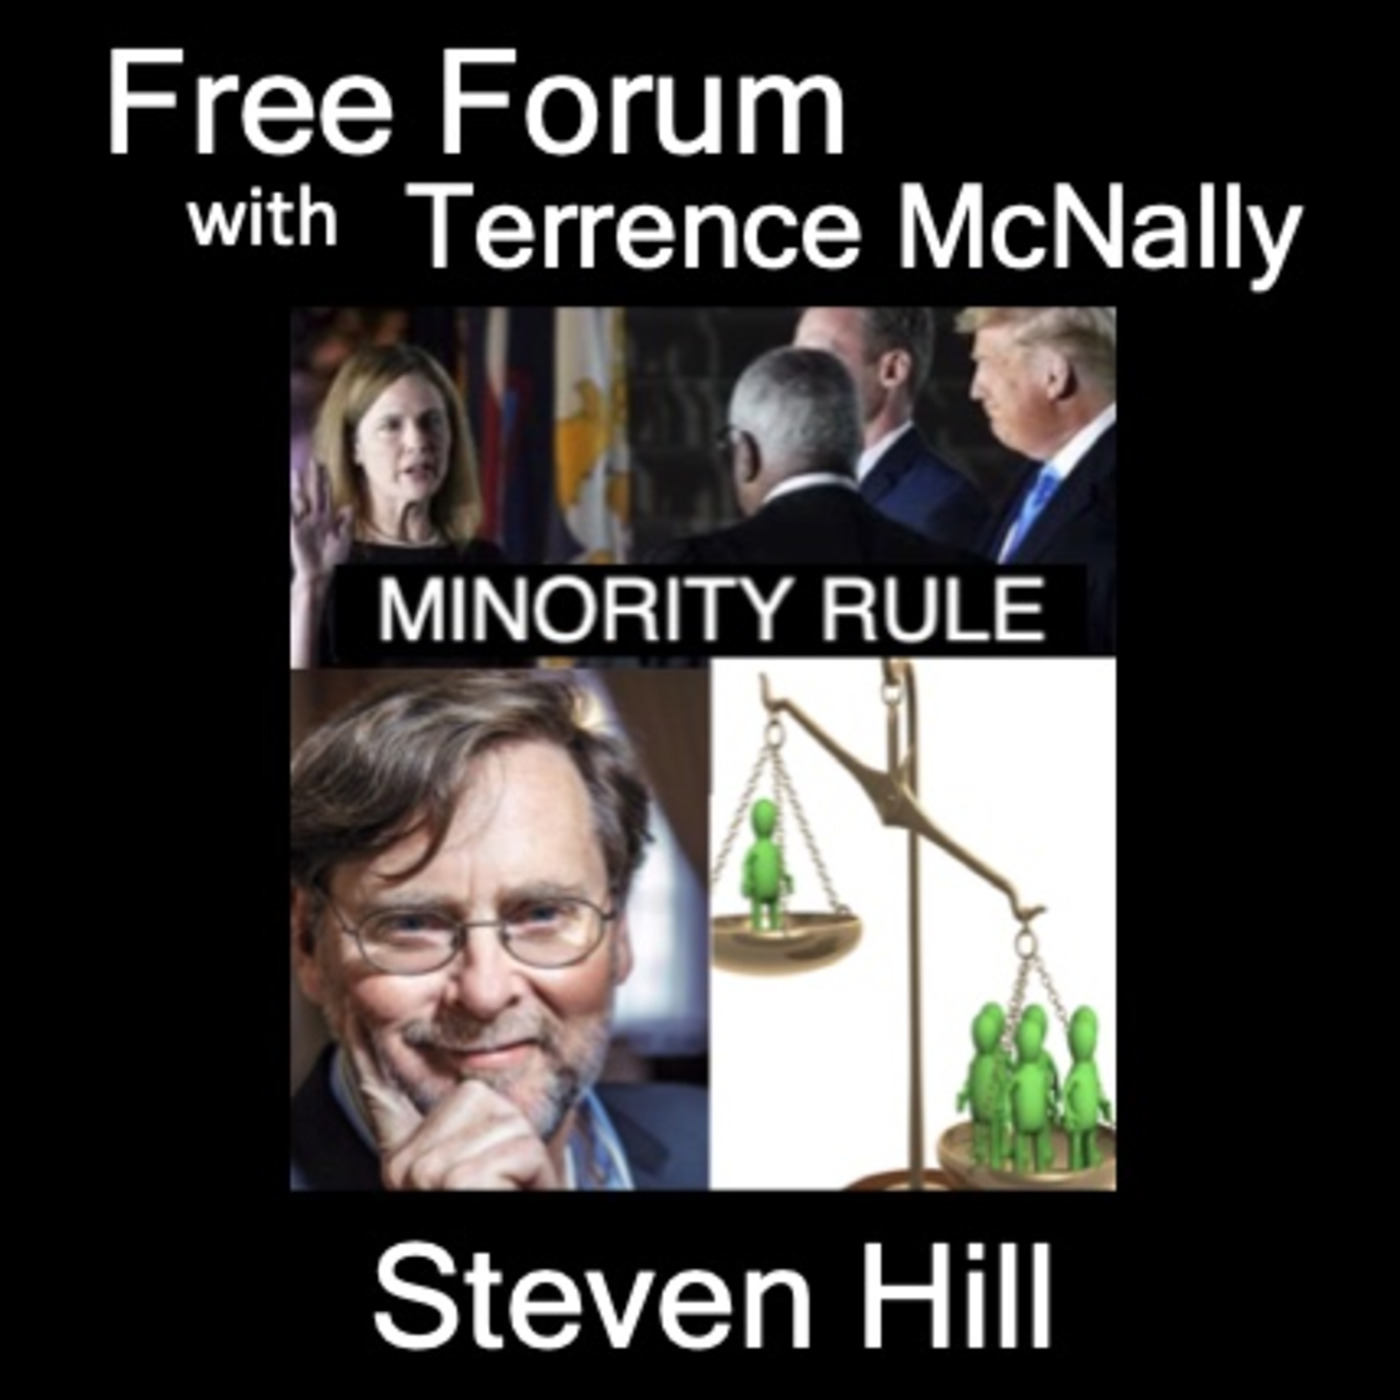 Episode 566: How do we resist Minority Rule? STEVEN HILL, DemocracySOS - 10 STEPS TO REPAIR DEMOCRACY